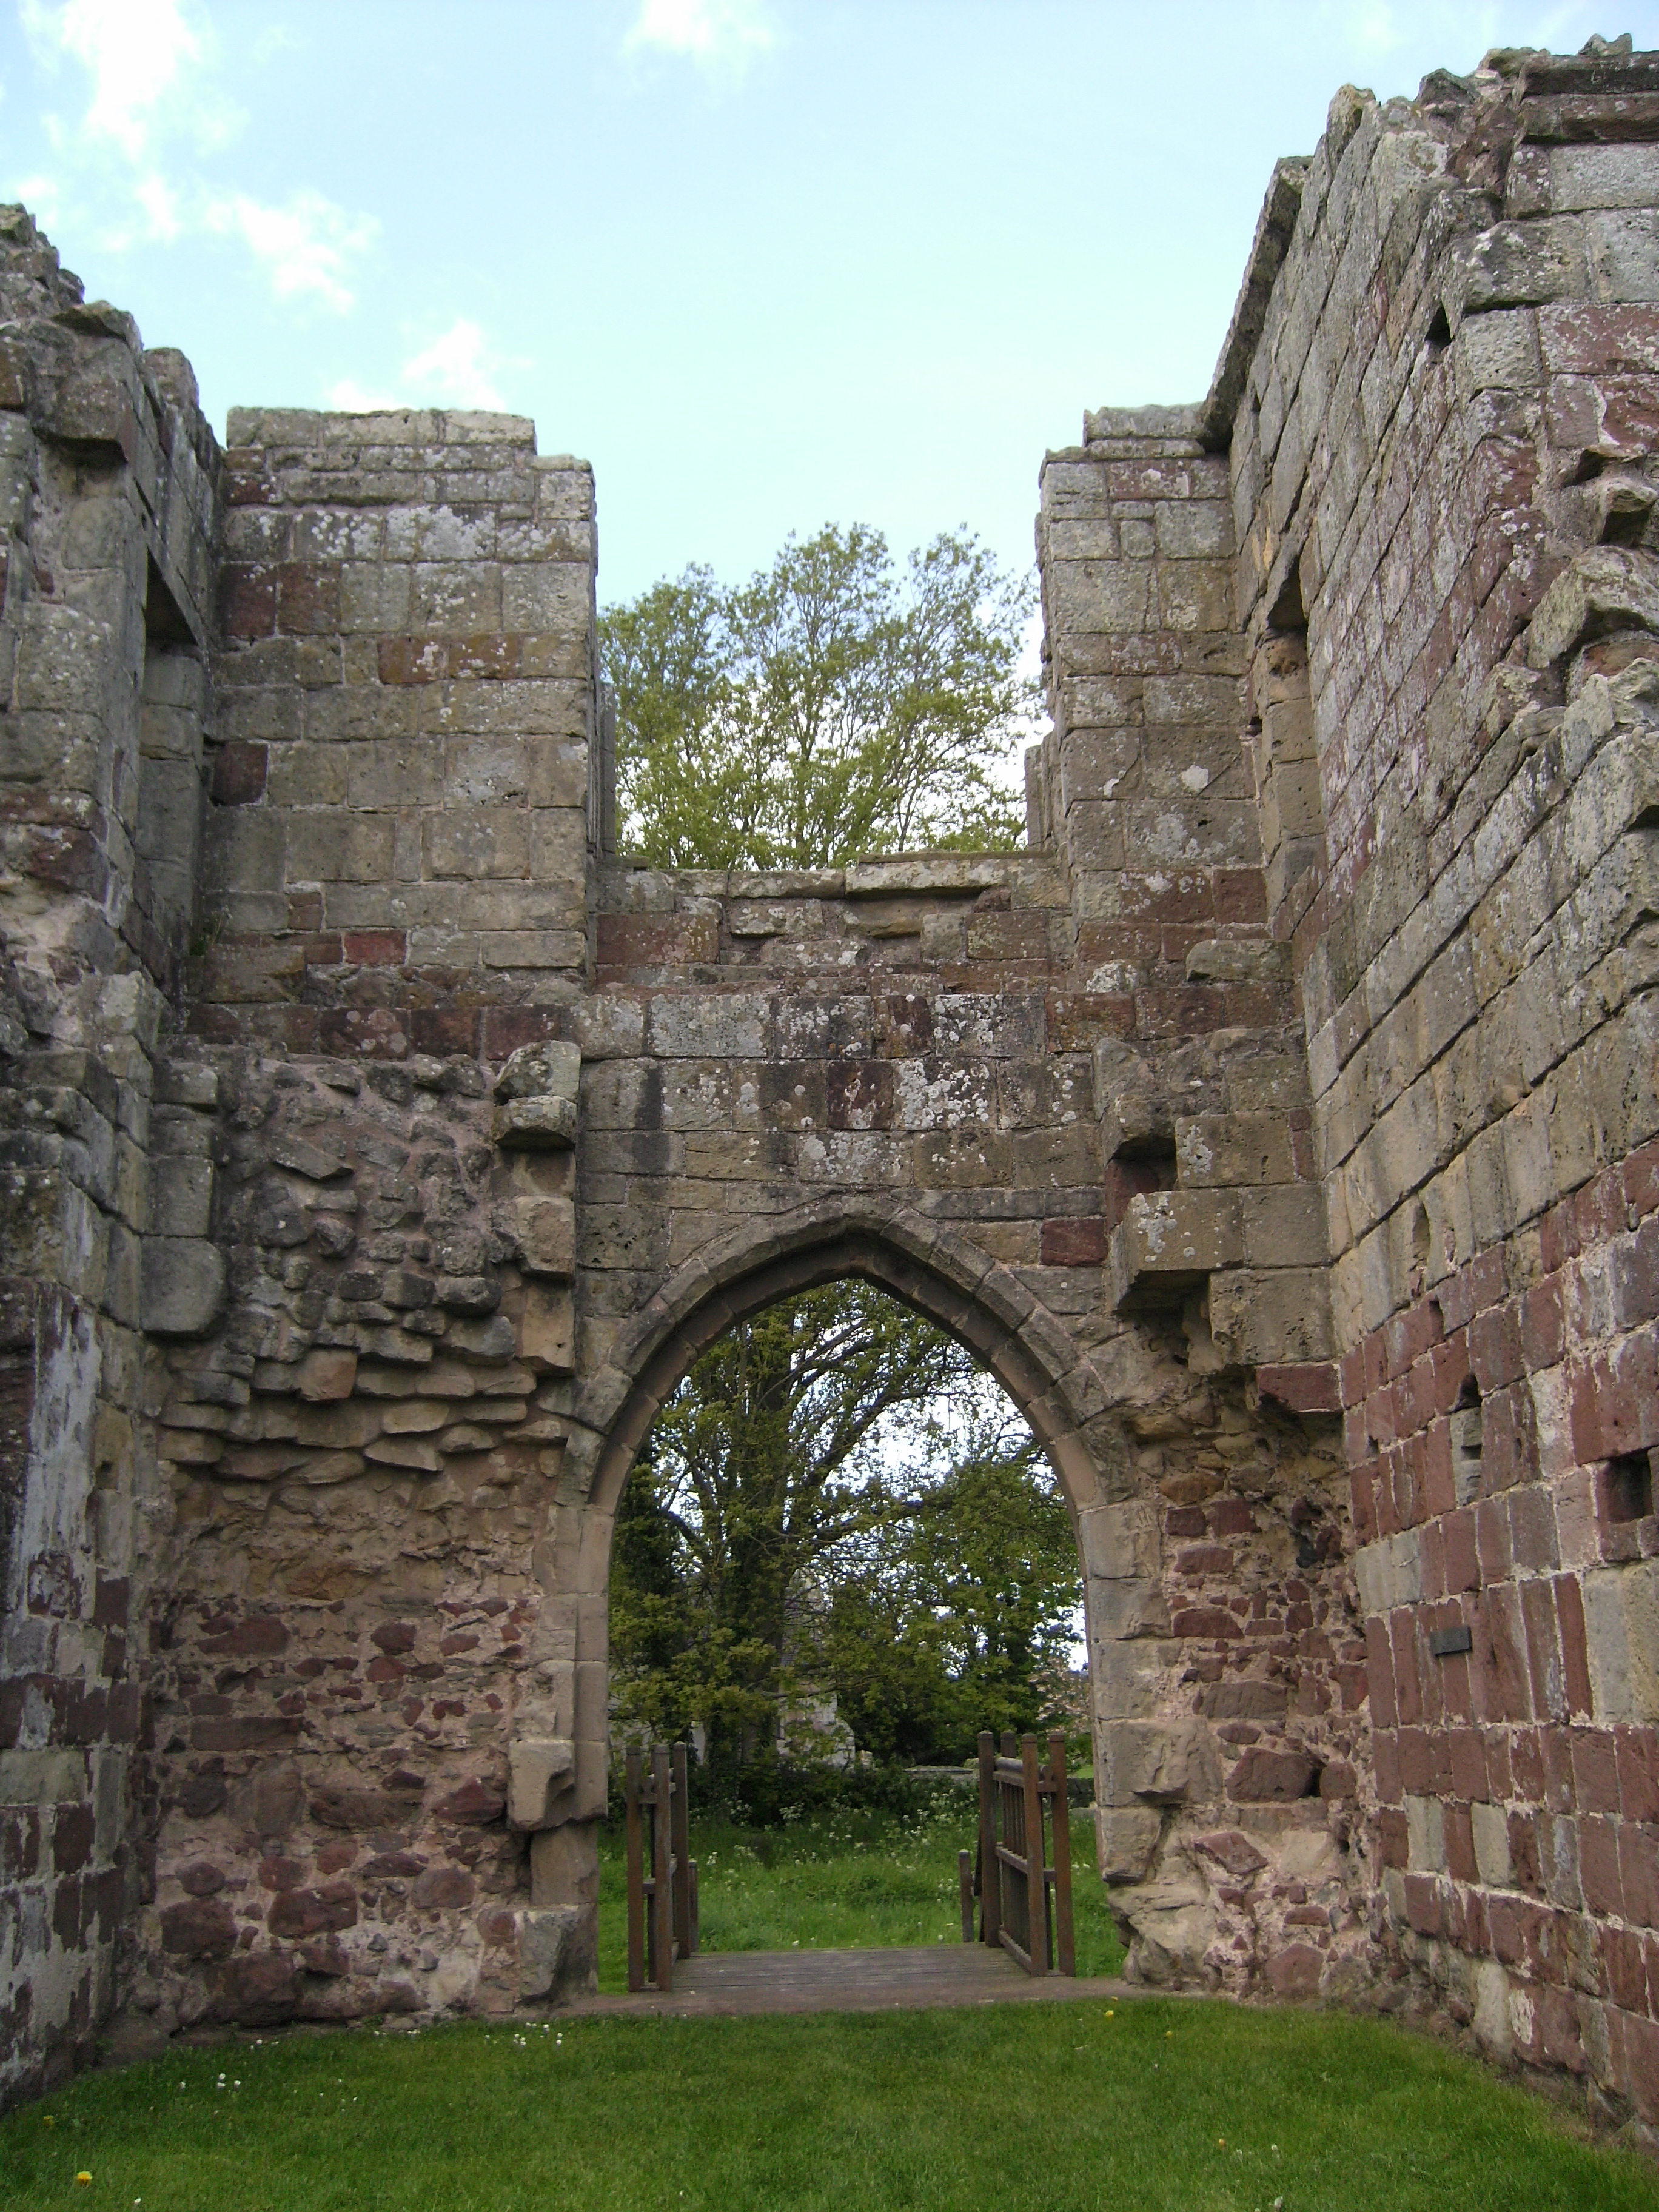 Interior of gatehouse